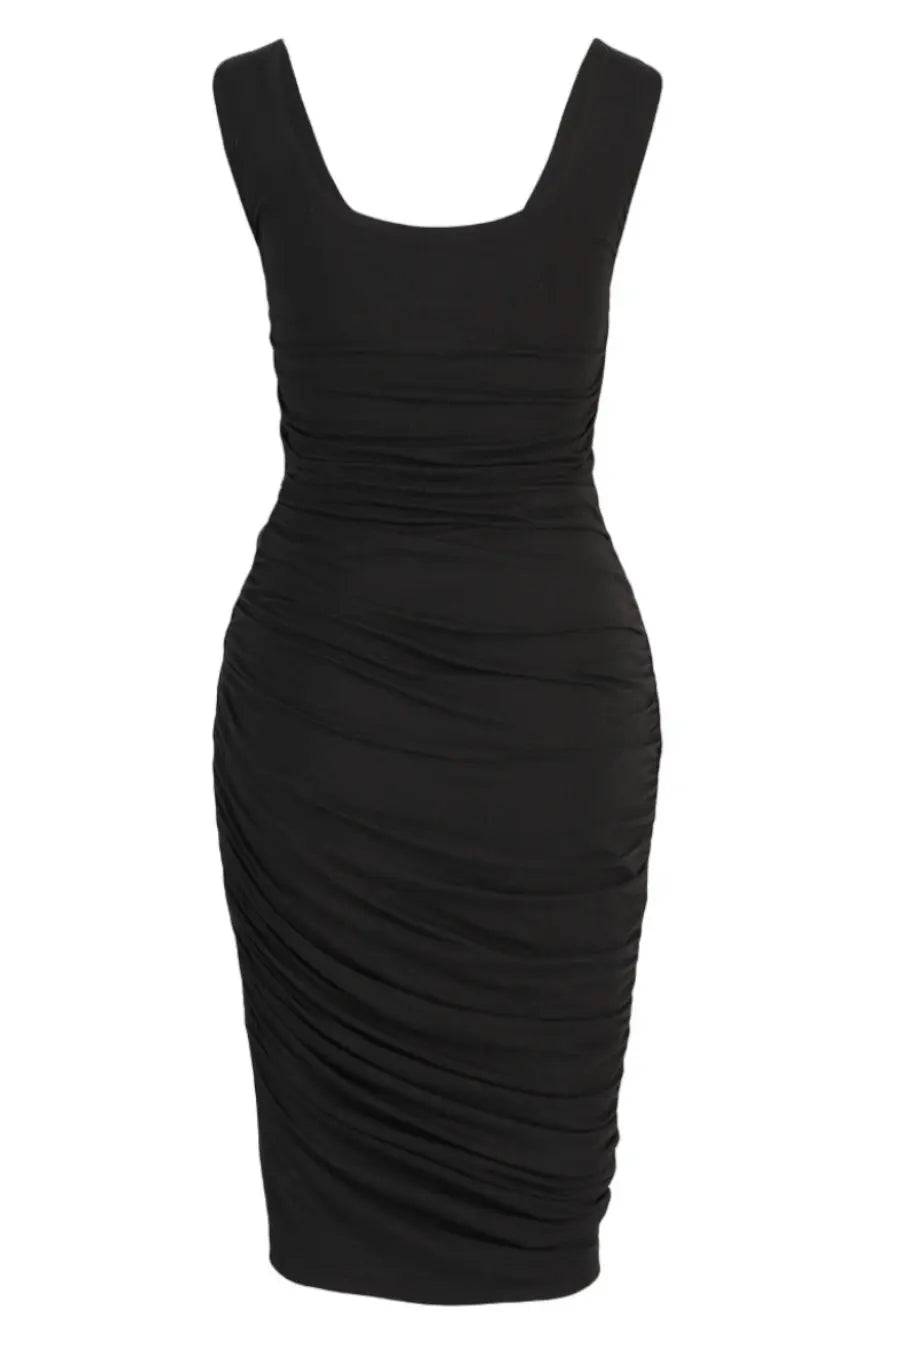 Embodycon™ Tank Shaping Dress - Black Embodycon